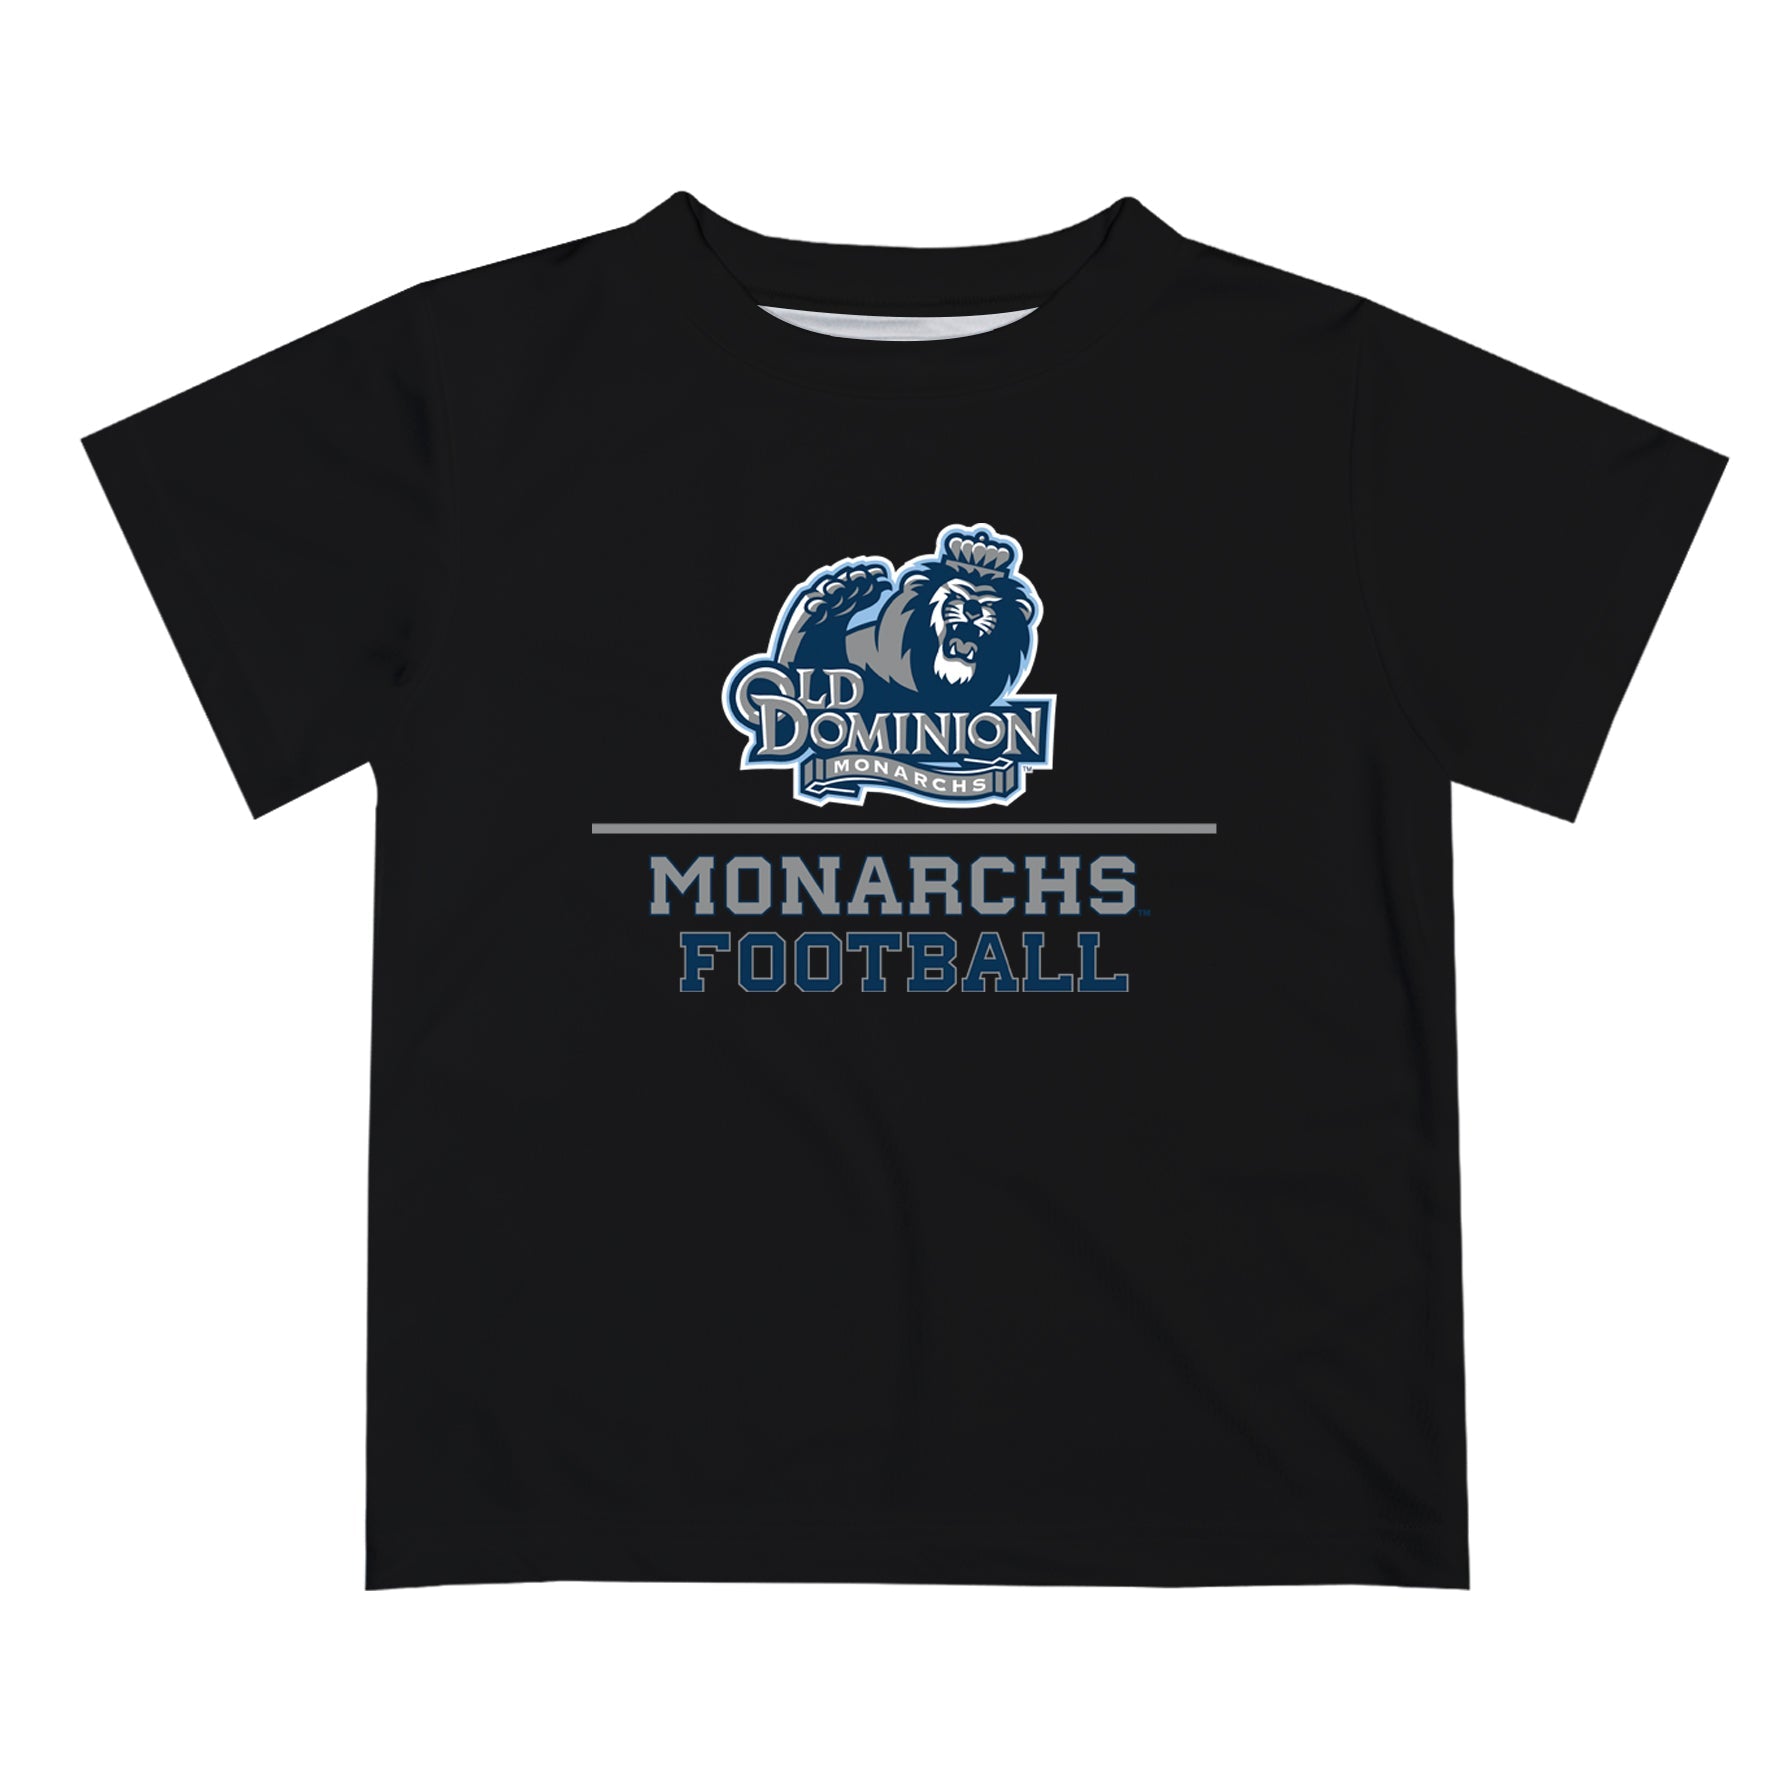 Old Dominion Monarchs Vive La Fete Football V1 Black Short Sleeve Tee Shirt